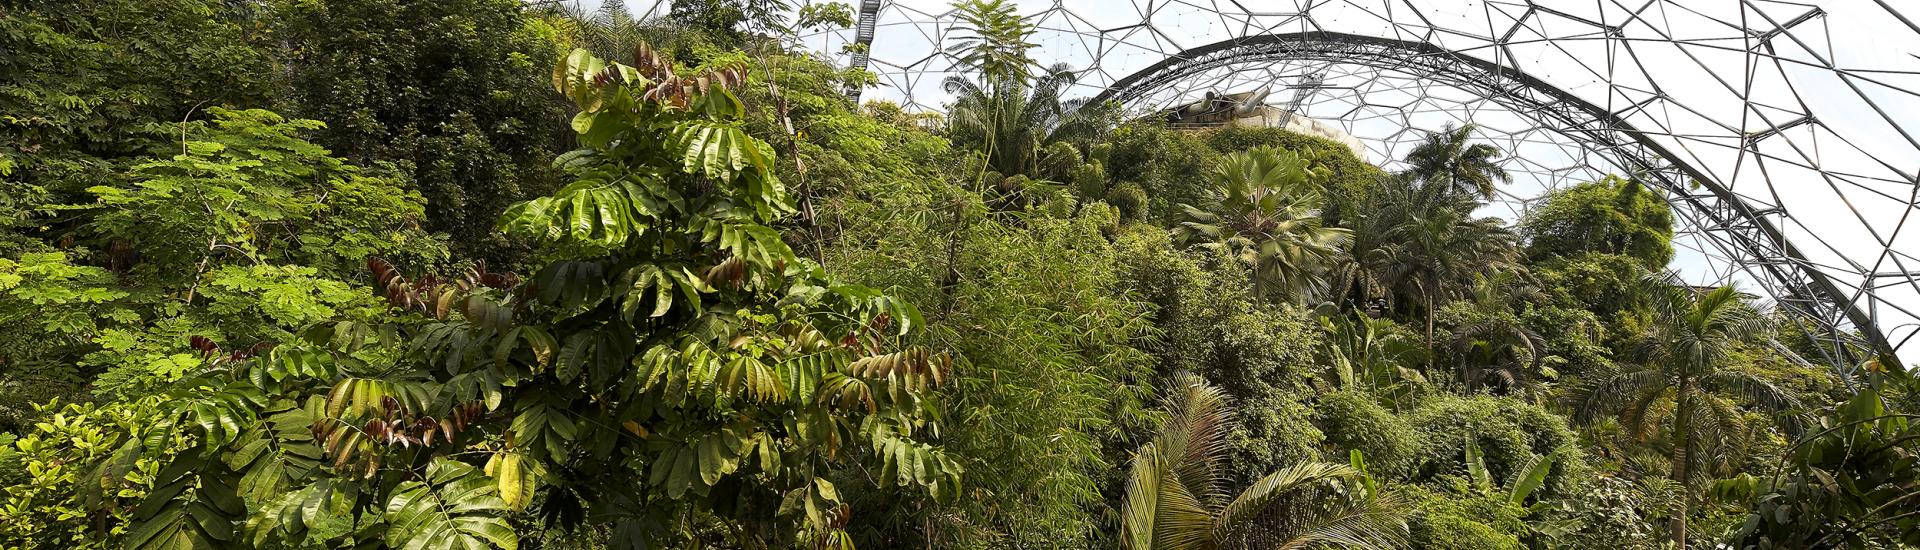 Rainforest Biome at Eden Project